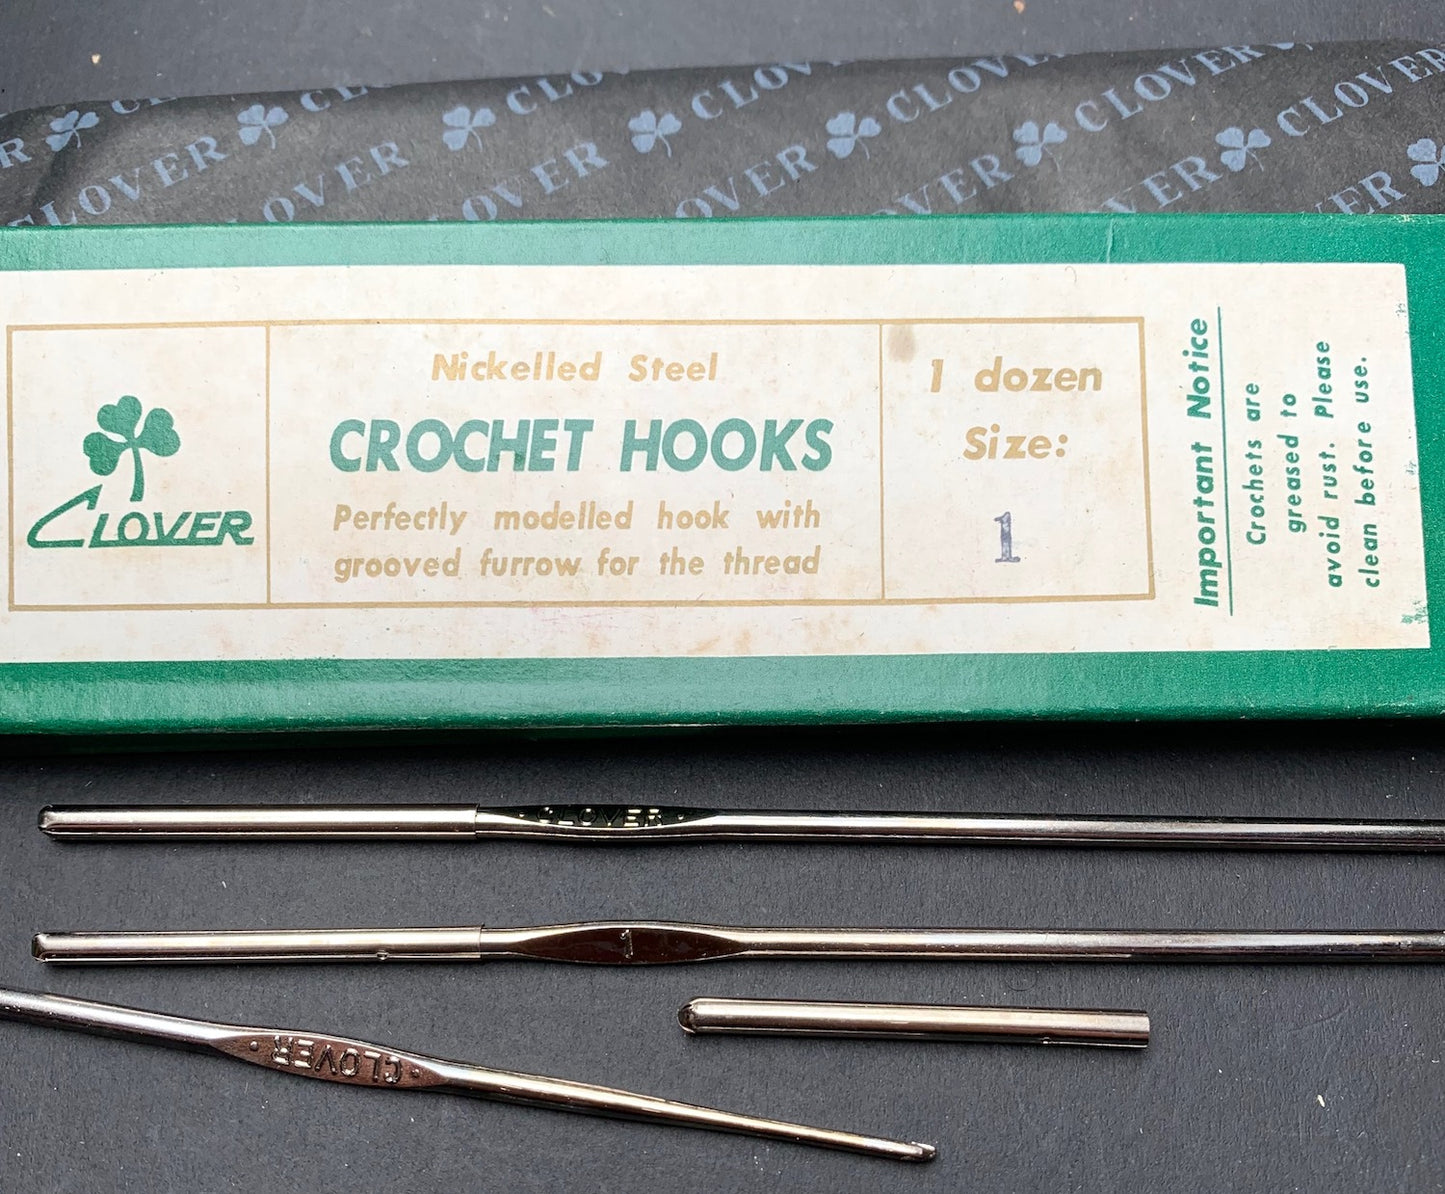 Vintage Box of 12 "Nickelled Steel" Crochet Hooks - size 1